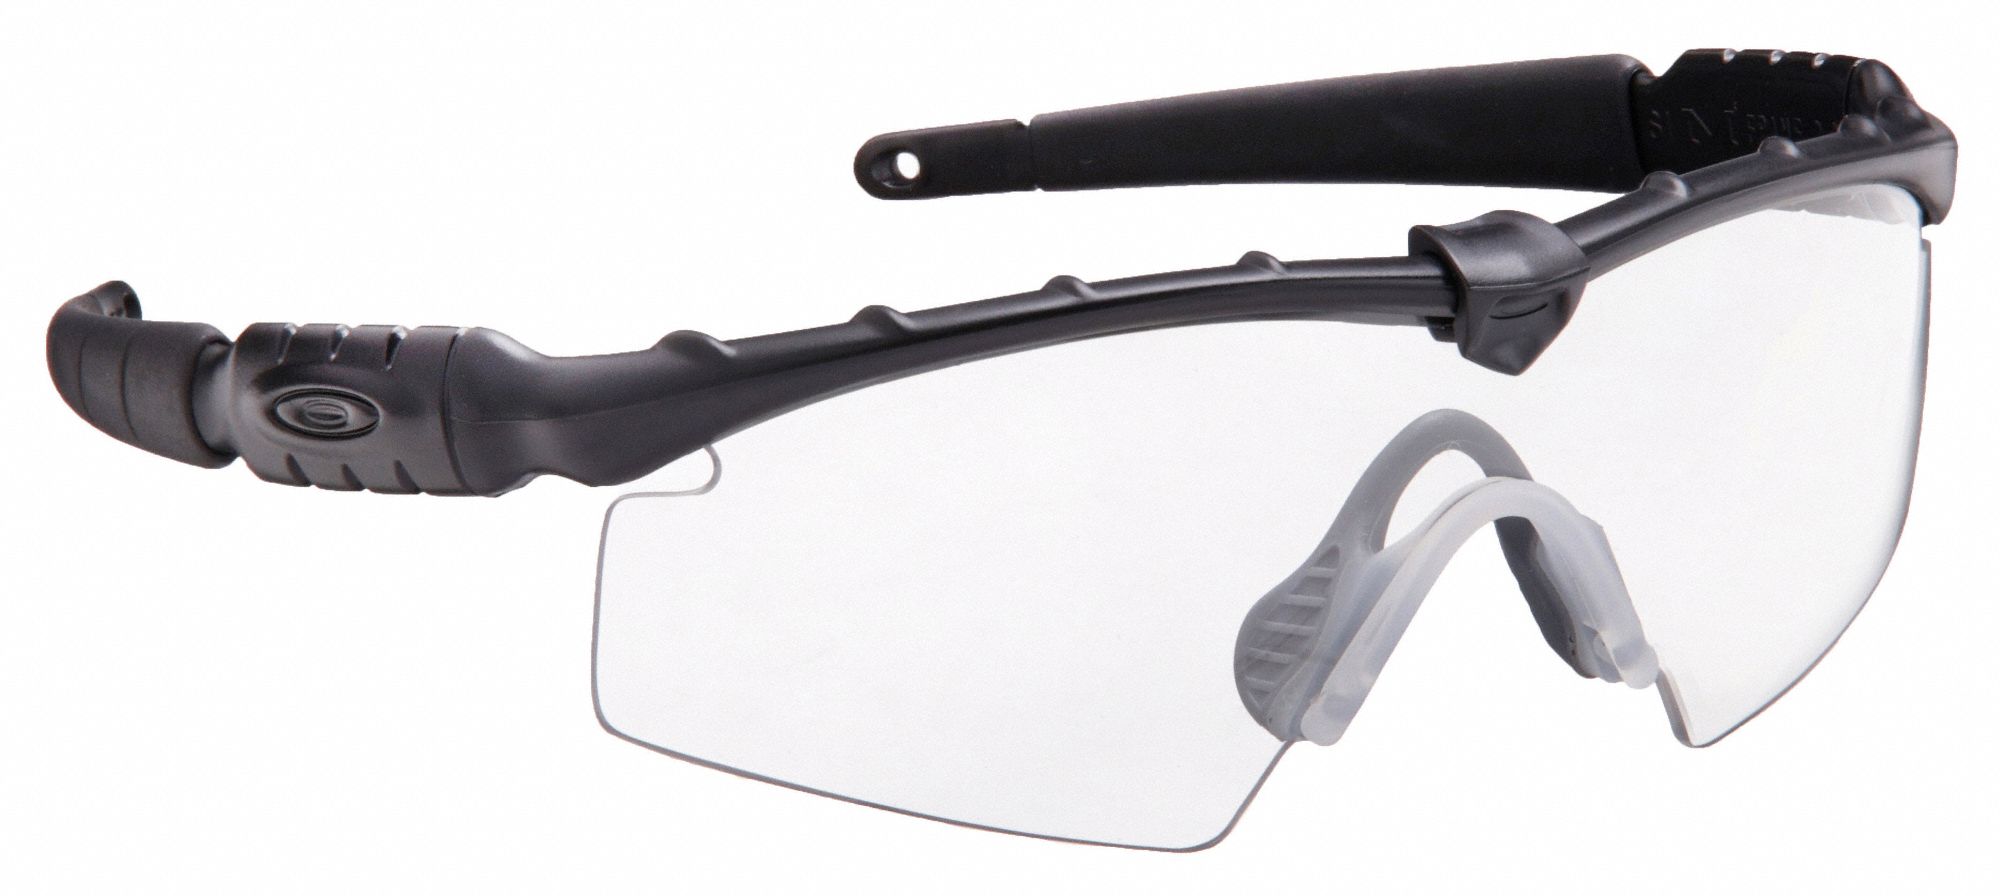 OAKLEY, Anti-Fog /Anti-Scratch, No Foam Lining, Safety Glasses -  417X35|11-139 - Grainger